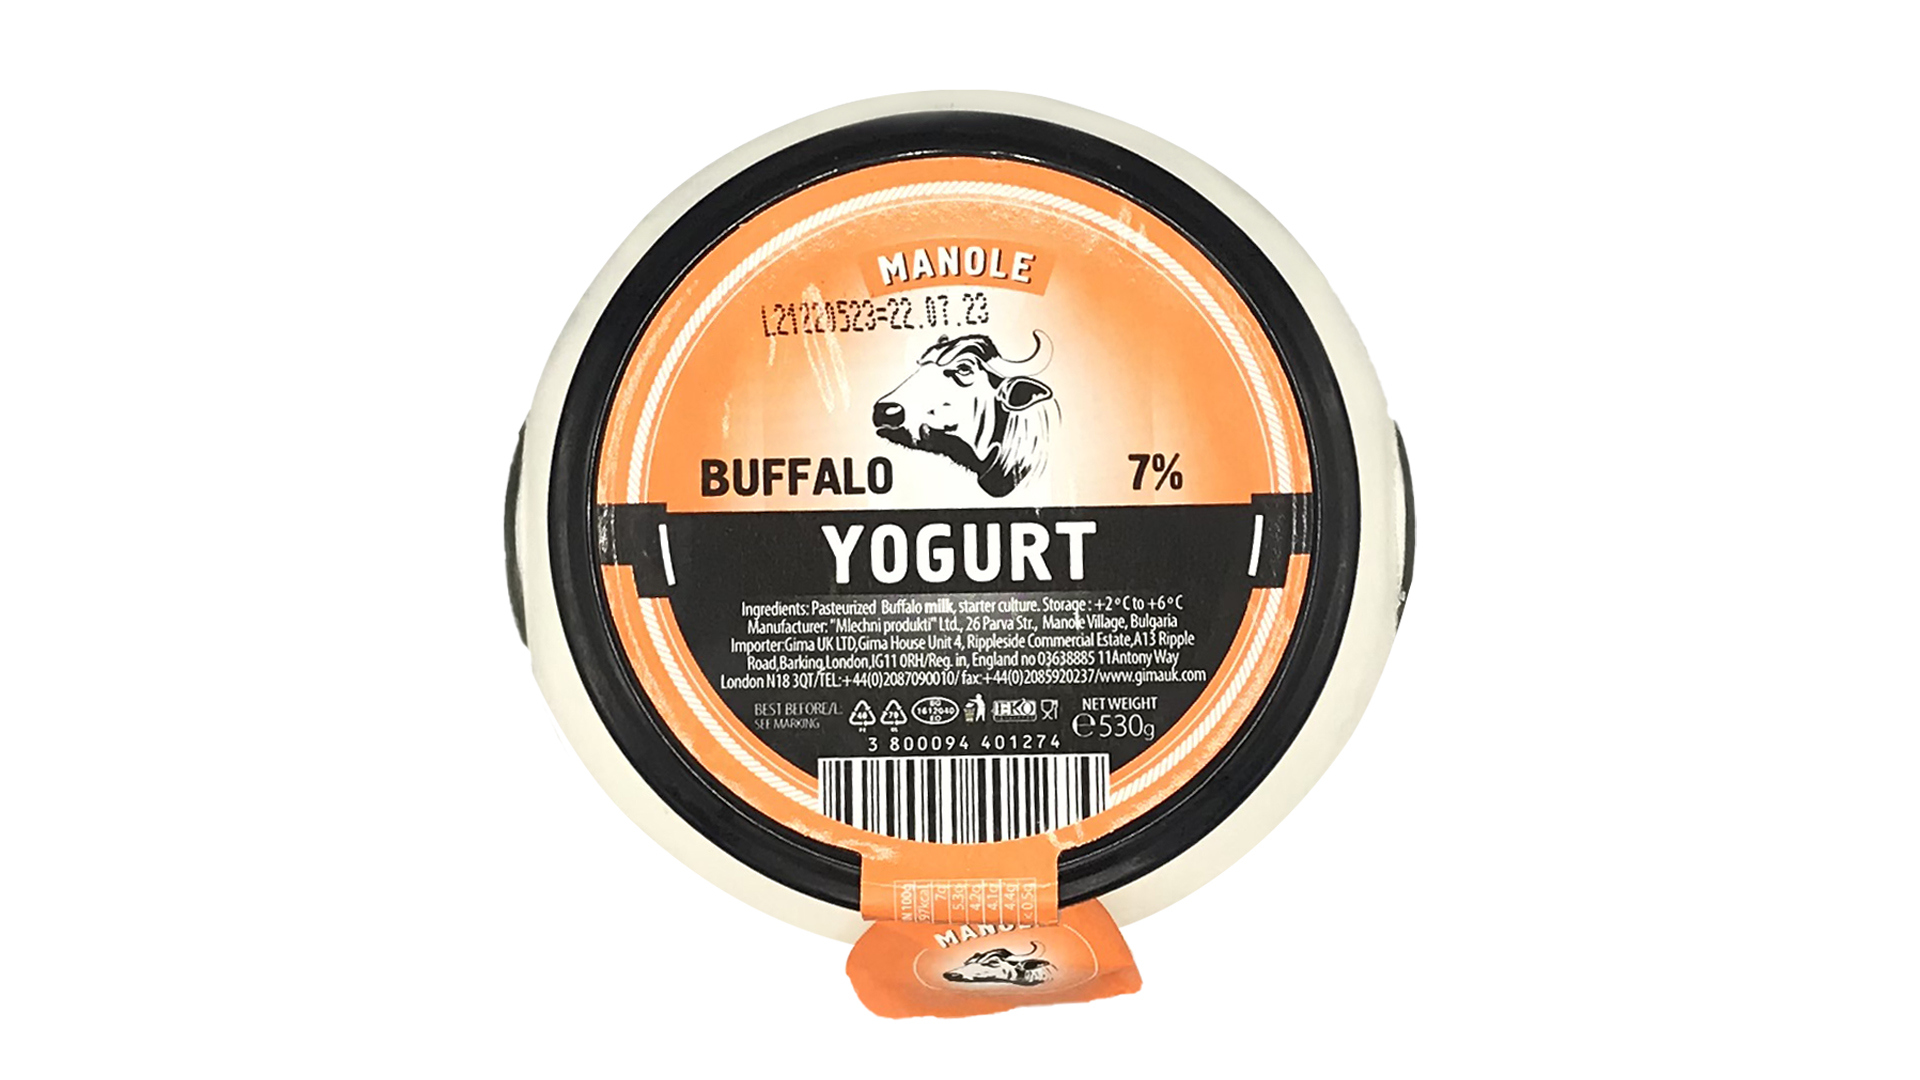 Manole Buffalo 7 Yogurt 530g 1